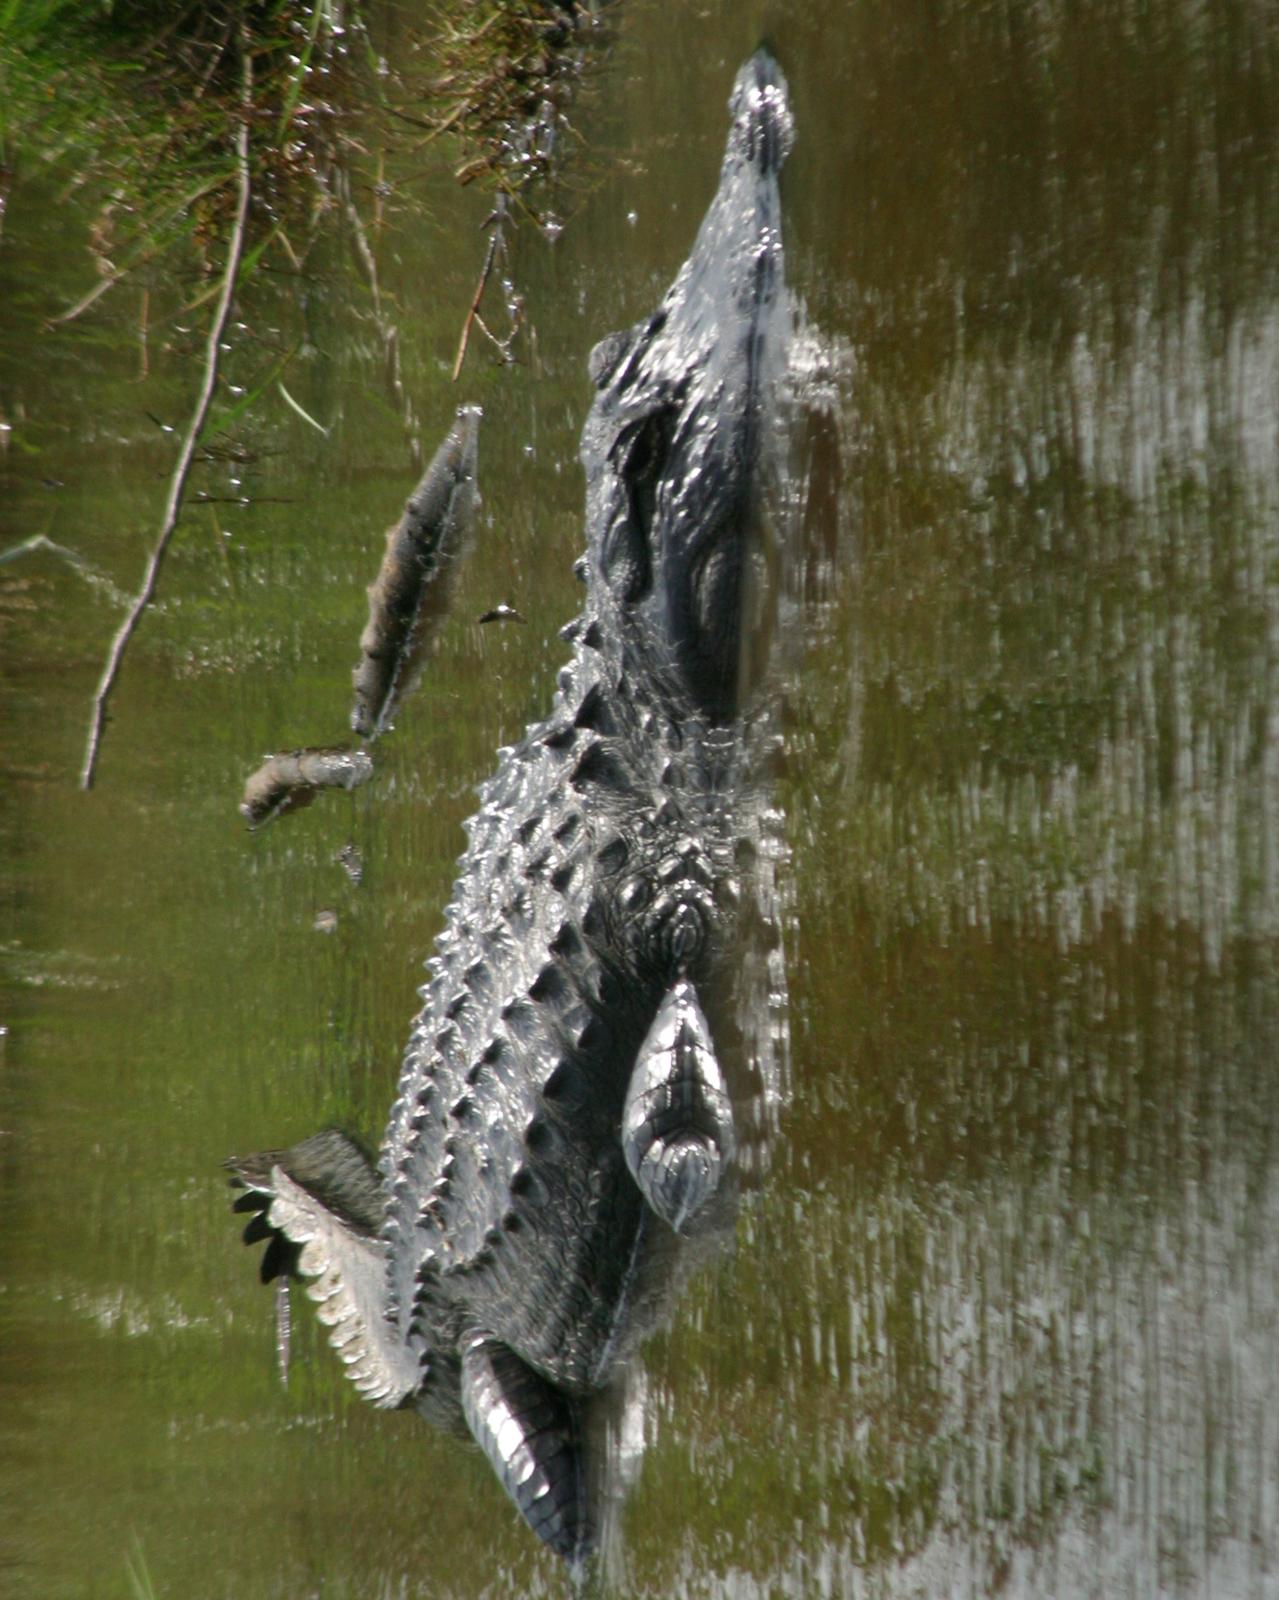 American Alligator Photo by David Sarkozi